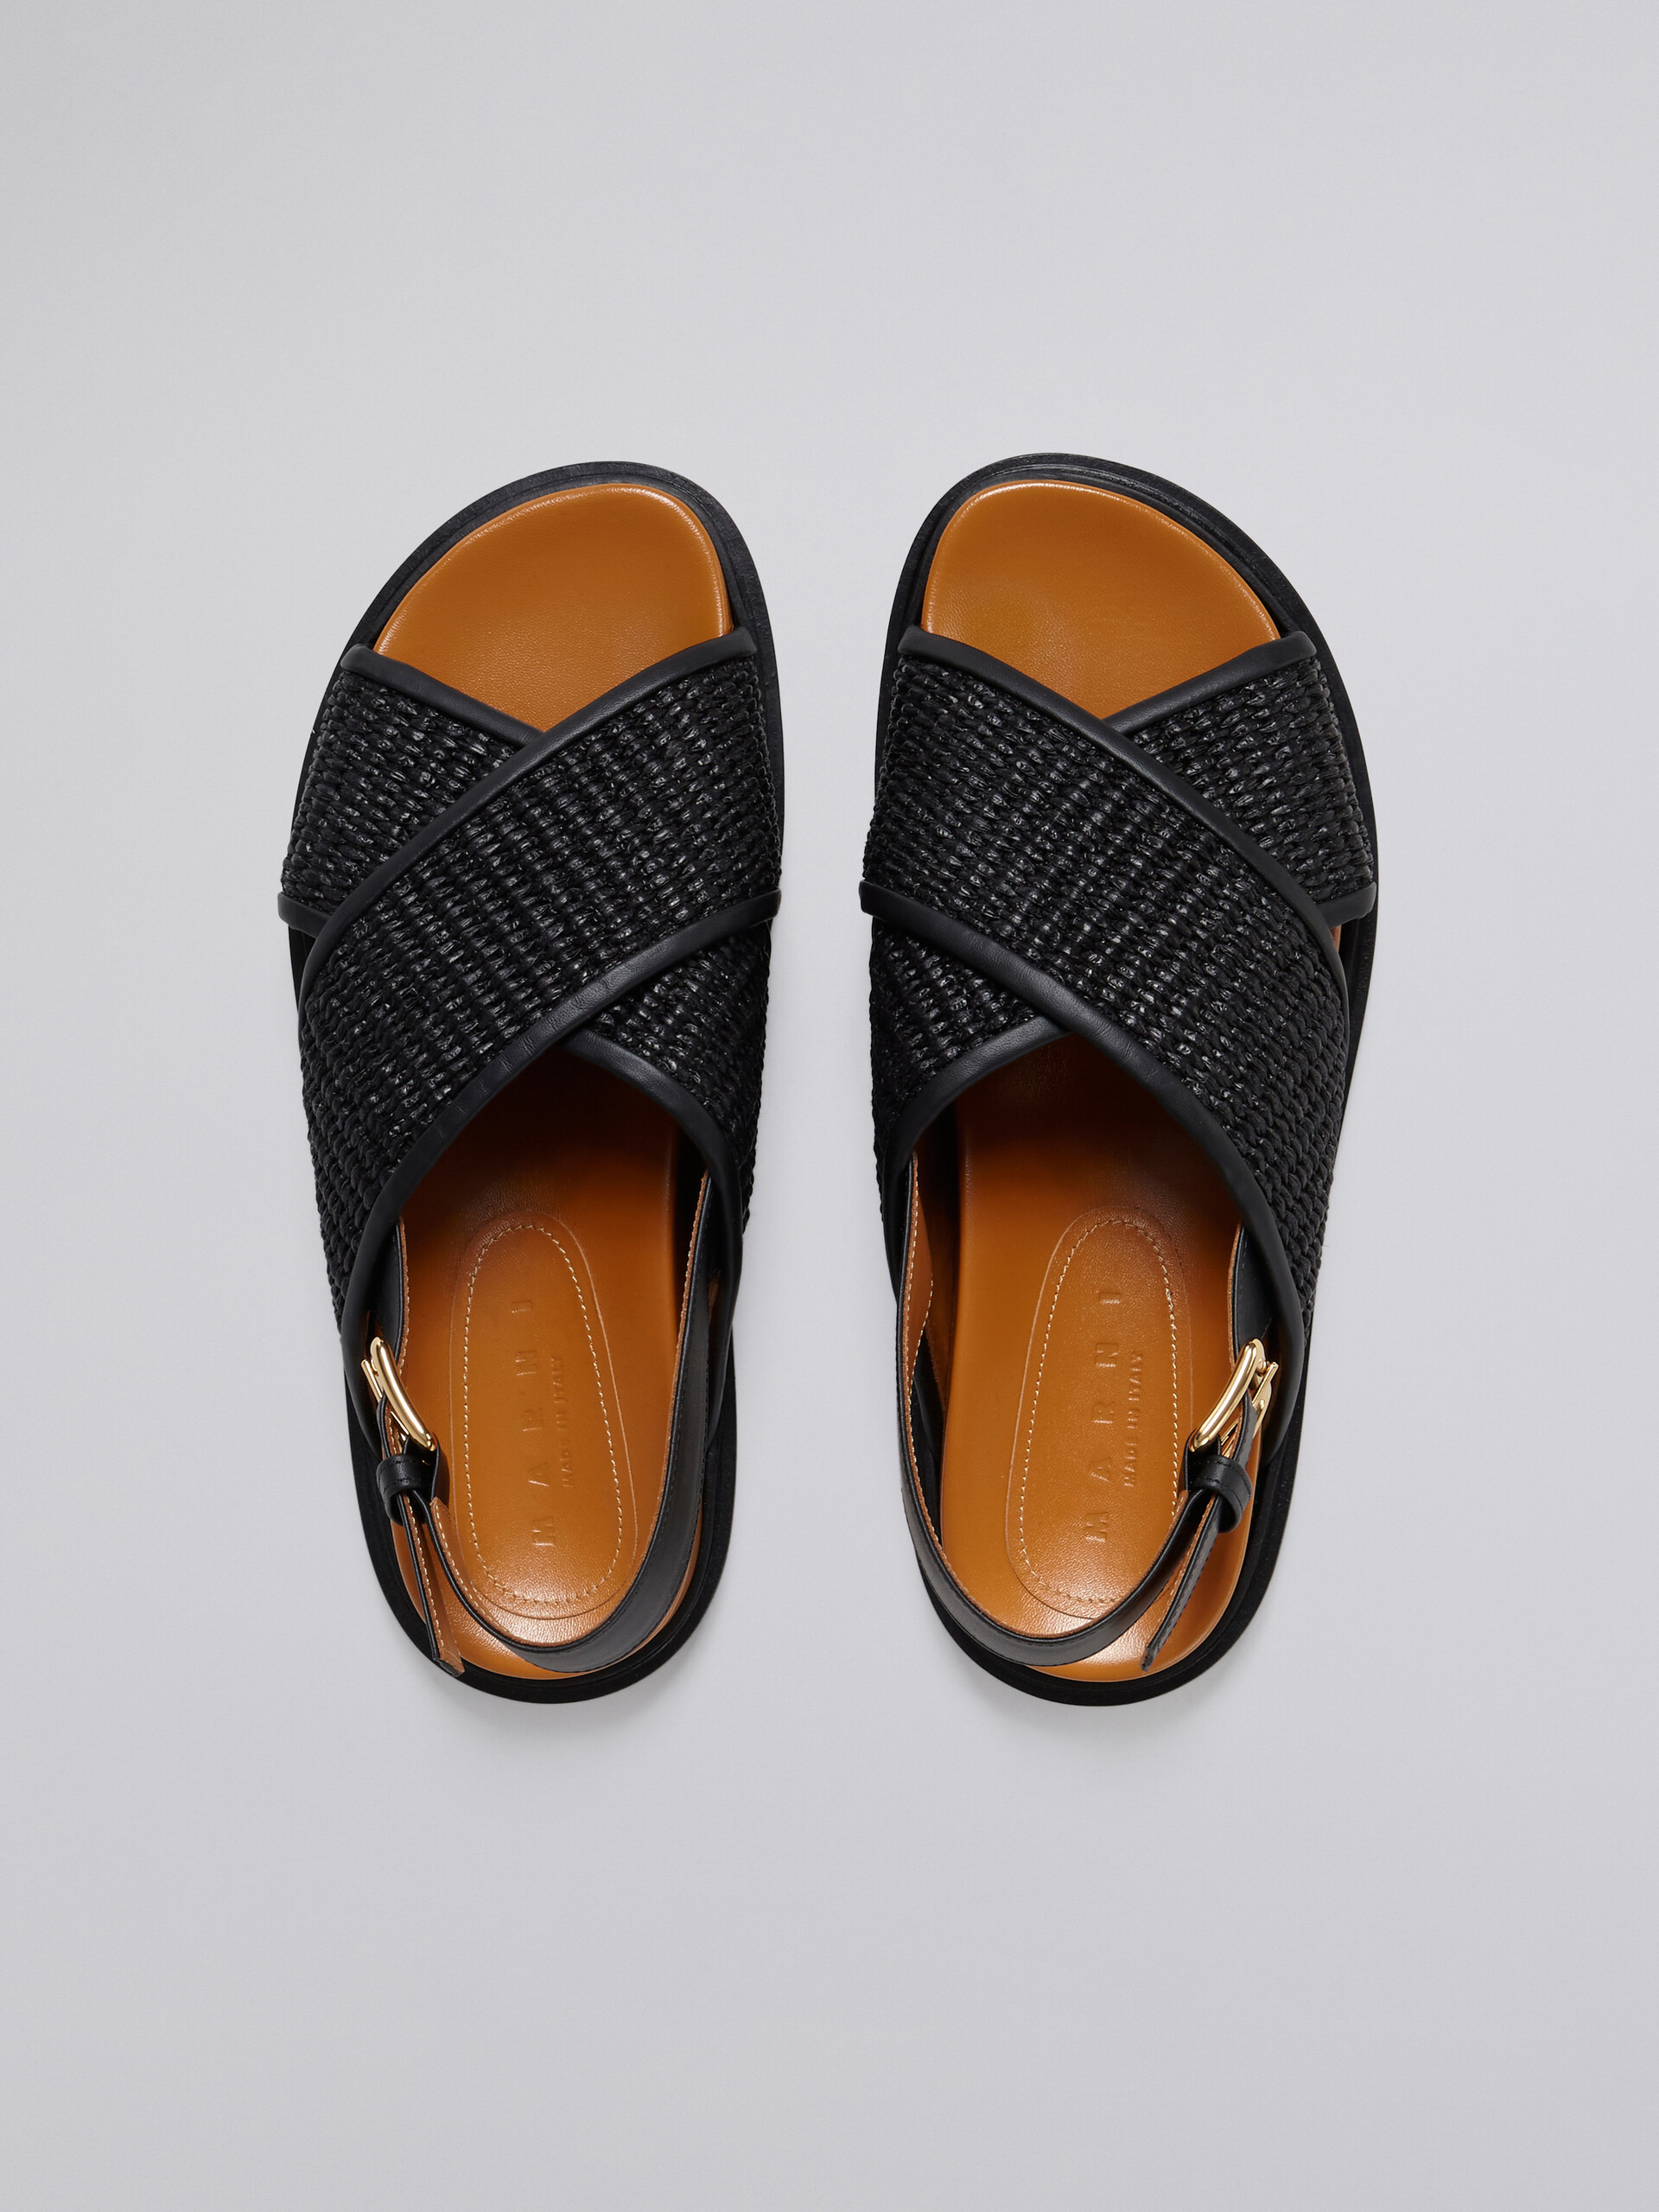 Fußbett-Sandalen aus braunem Leder und Material in Bast-Optik - Sandalen - Image 4